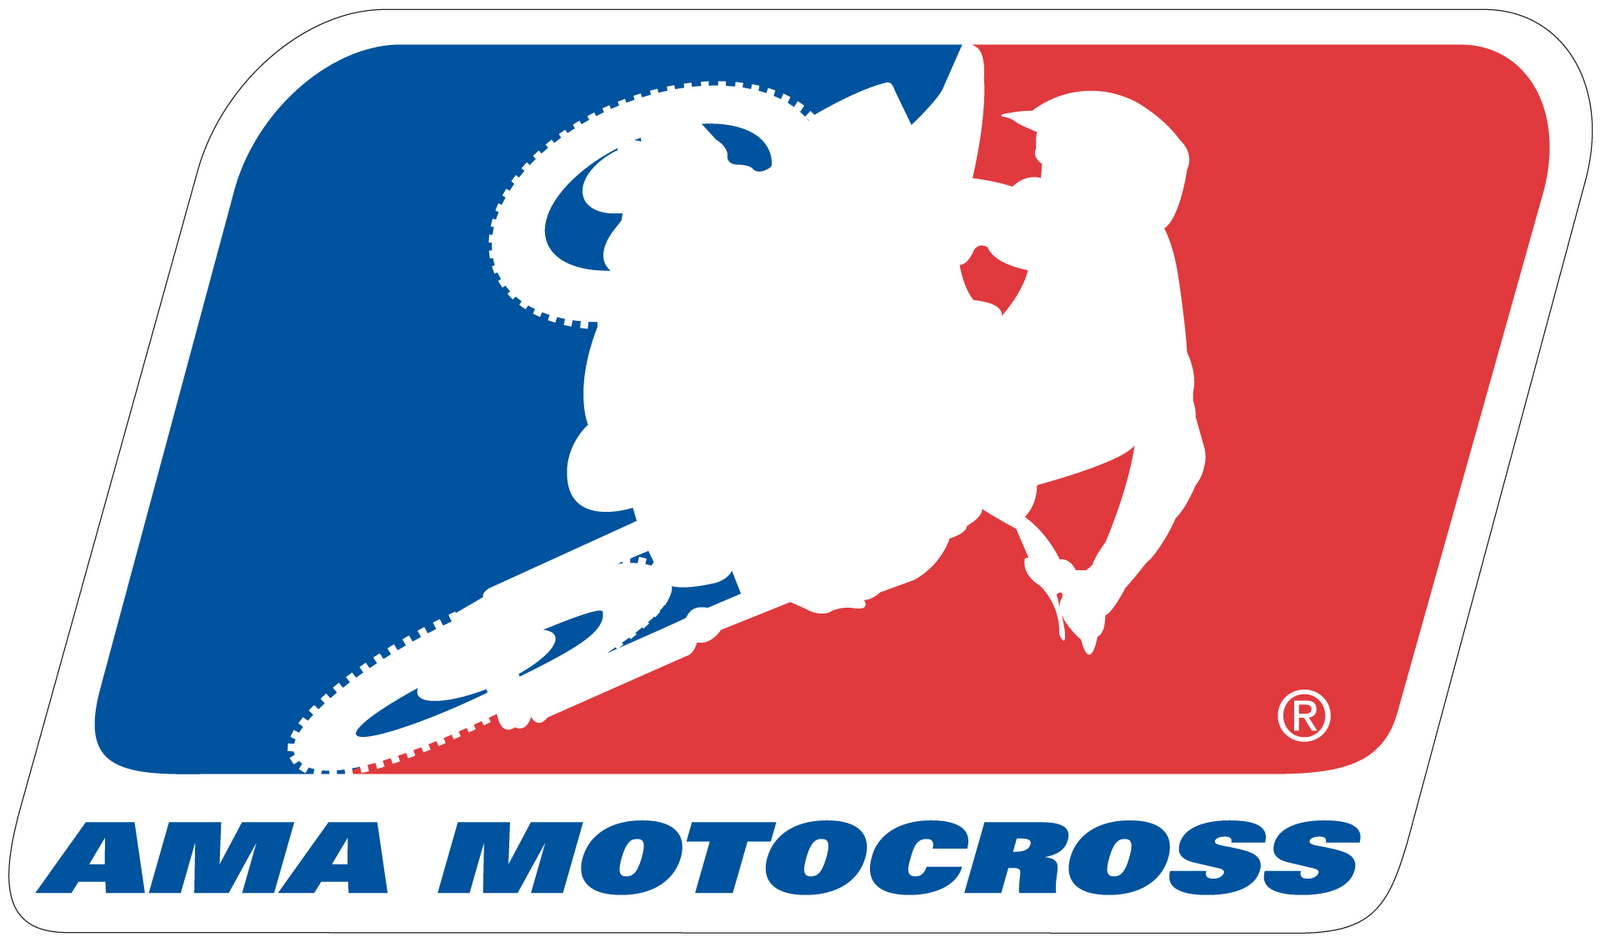 Free Motocross Cliparts Download Free Motocross Clipa - vrogue.co